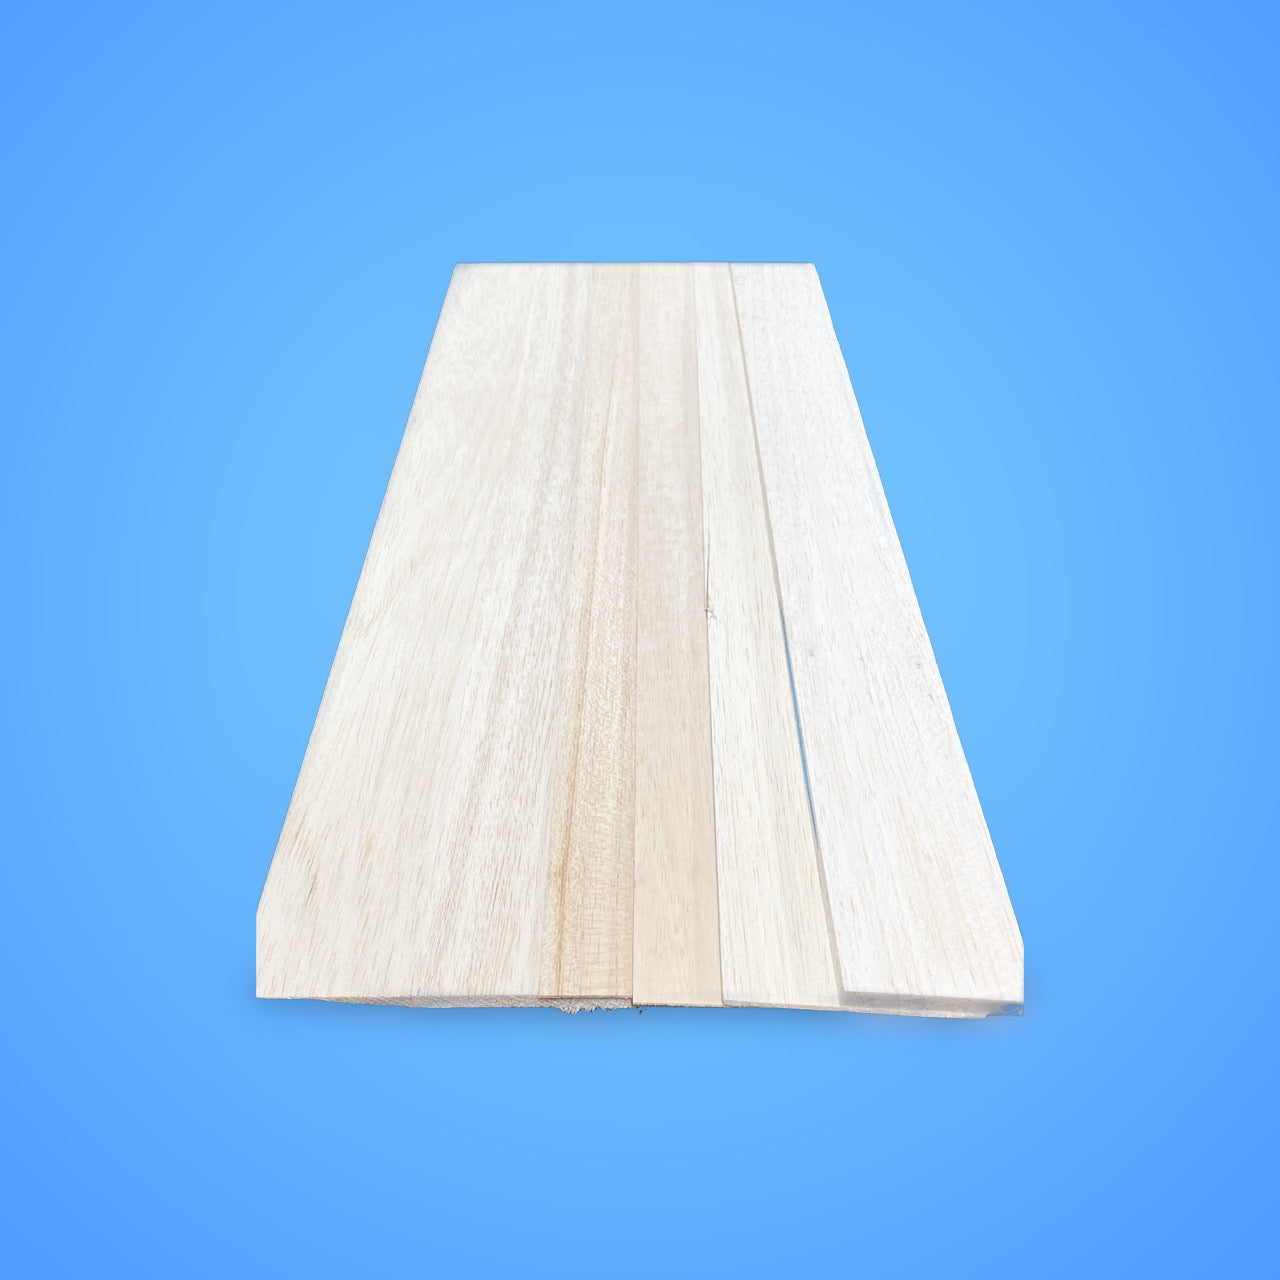 4x8 Plywood Sheets - 1/2